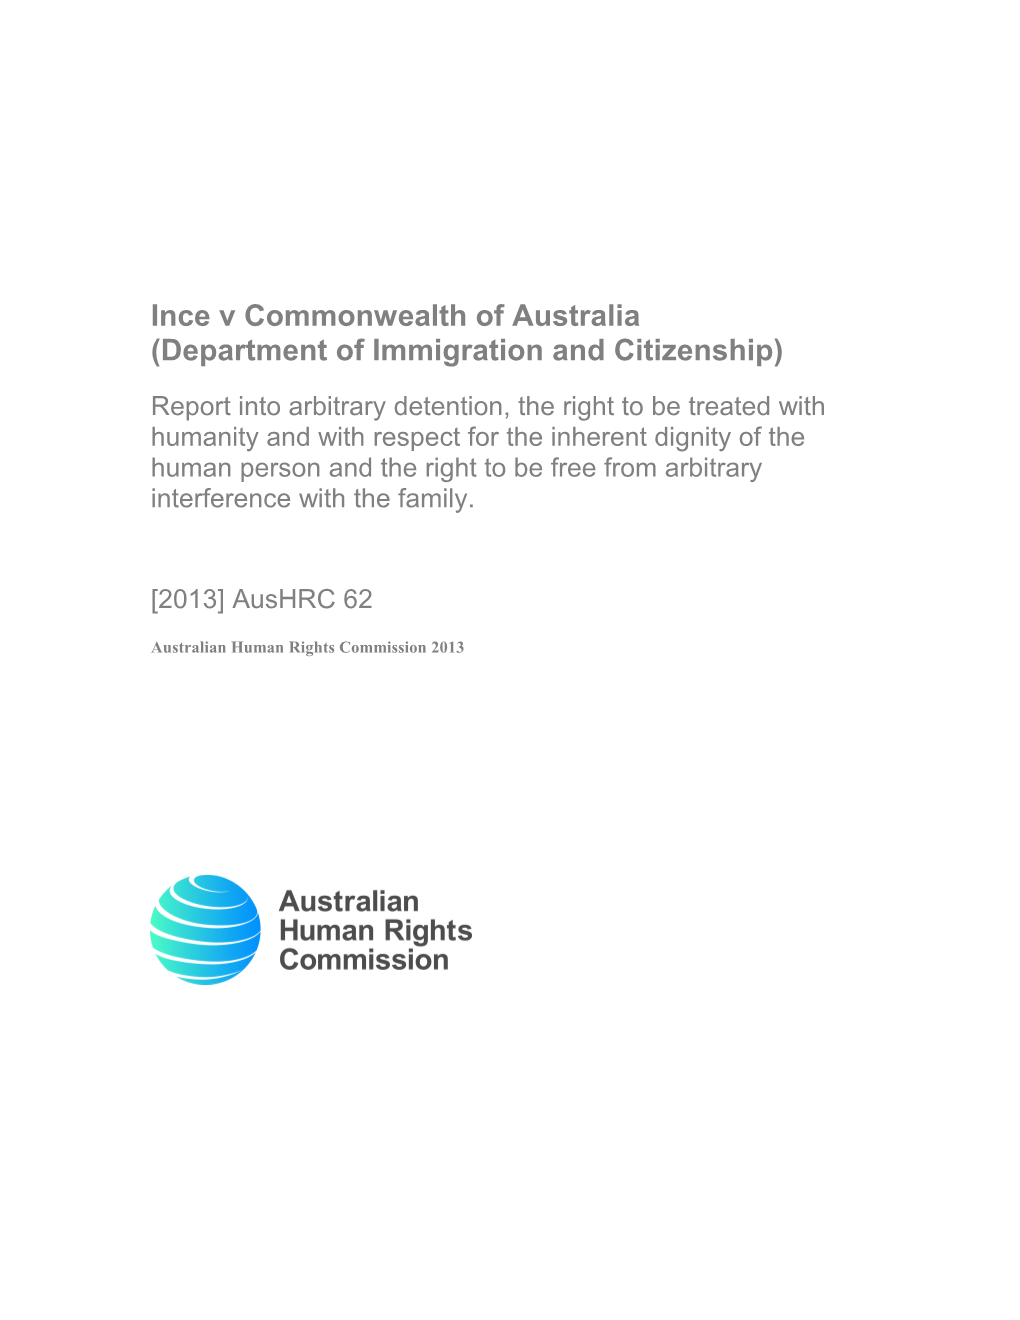 Australian Human Rights Commission 2013